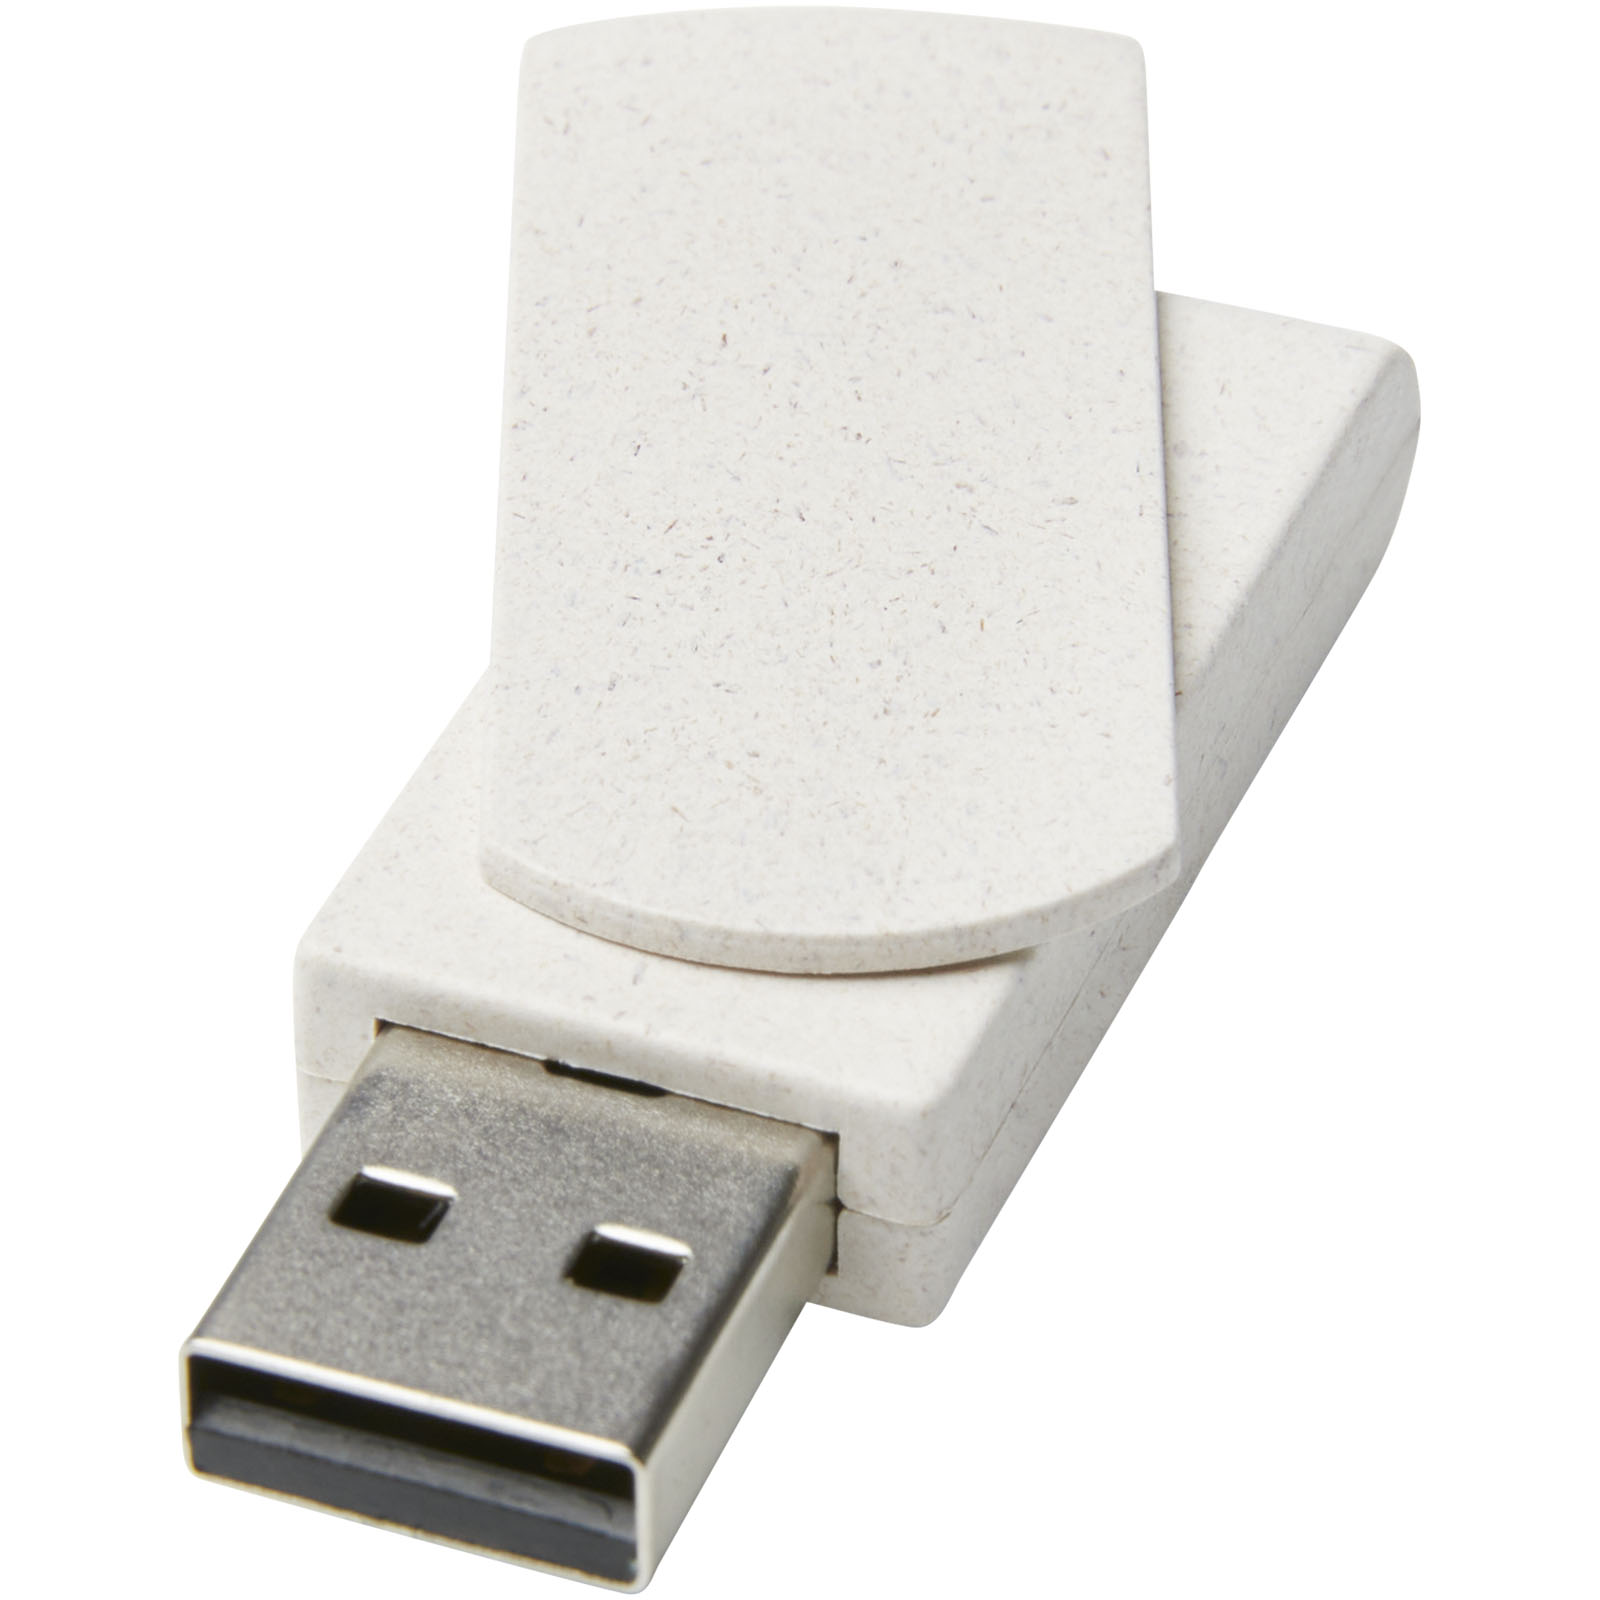 EcoStraw 4GB USB - Netherlangley - Piddletrenthide